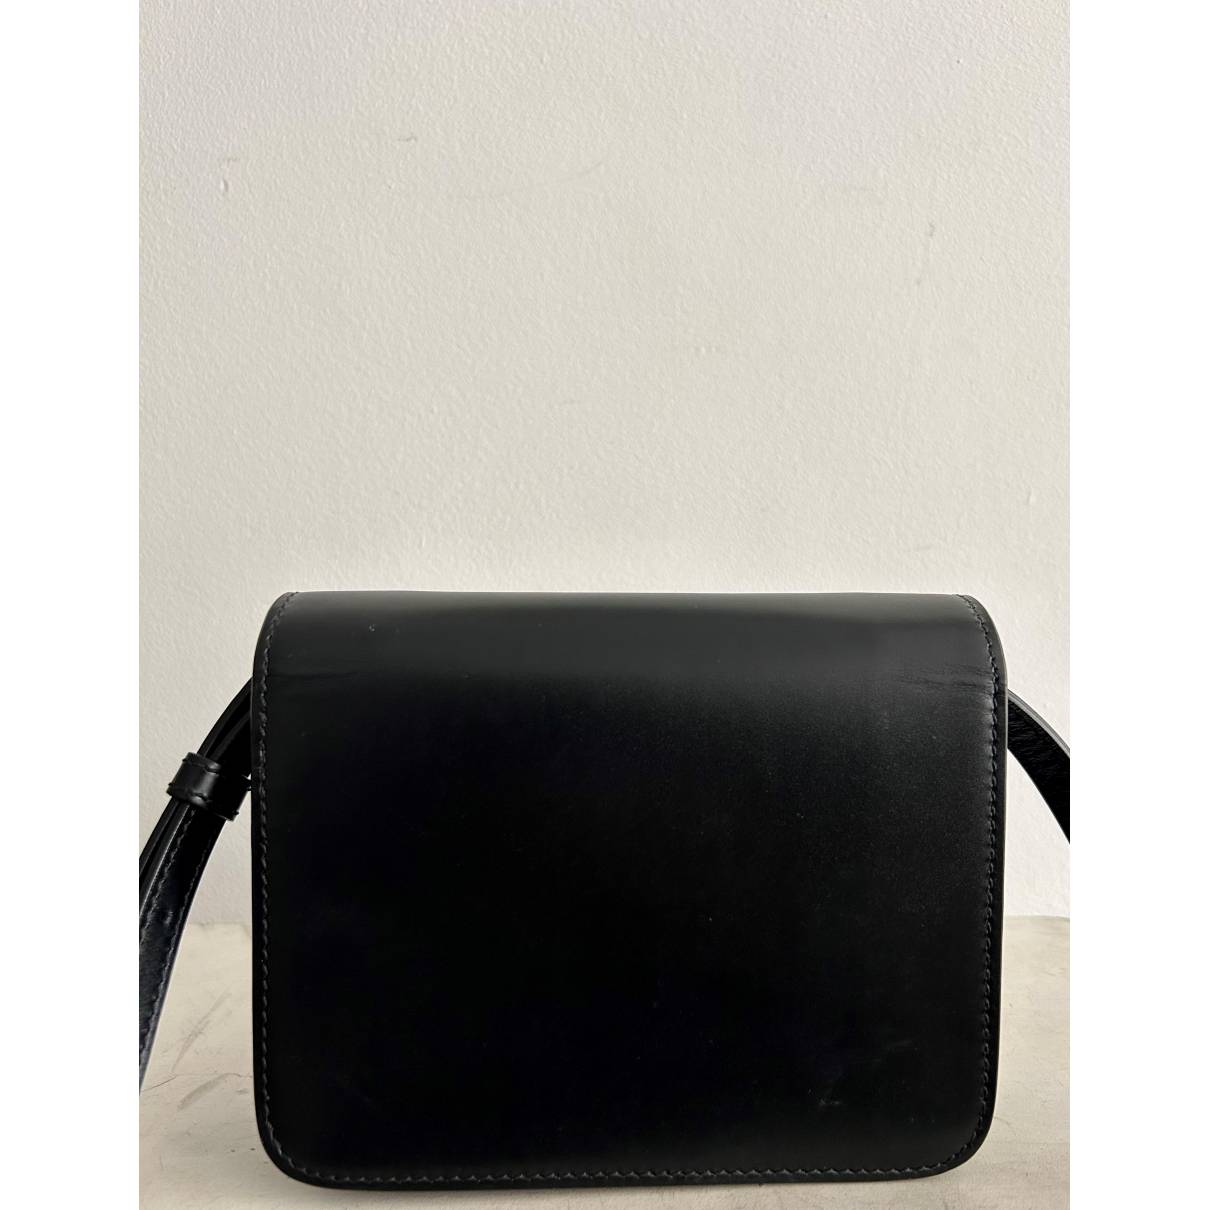 Buy Burberry TB bag leather crossbody bag online